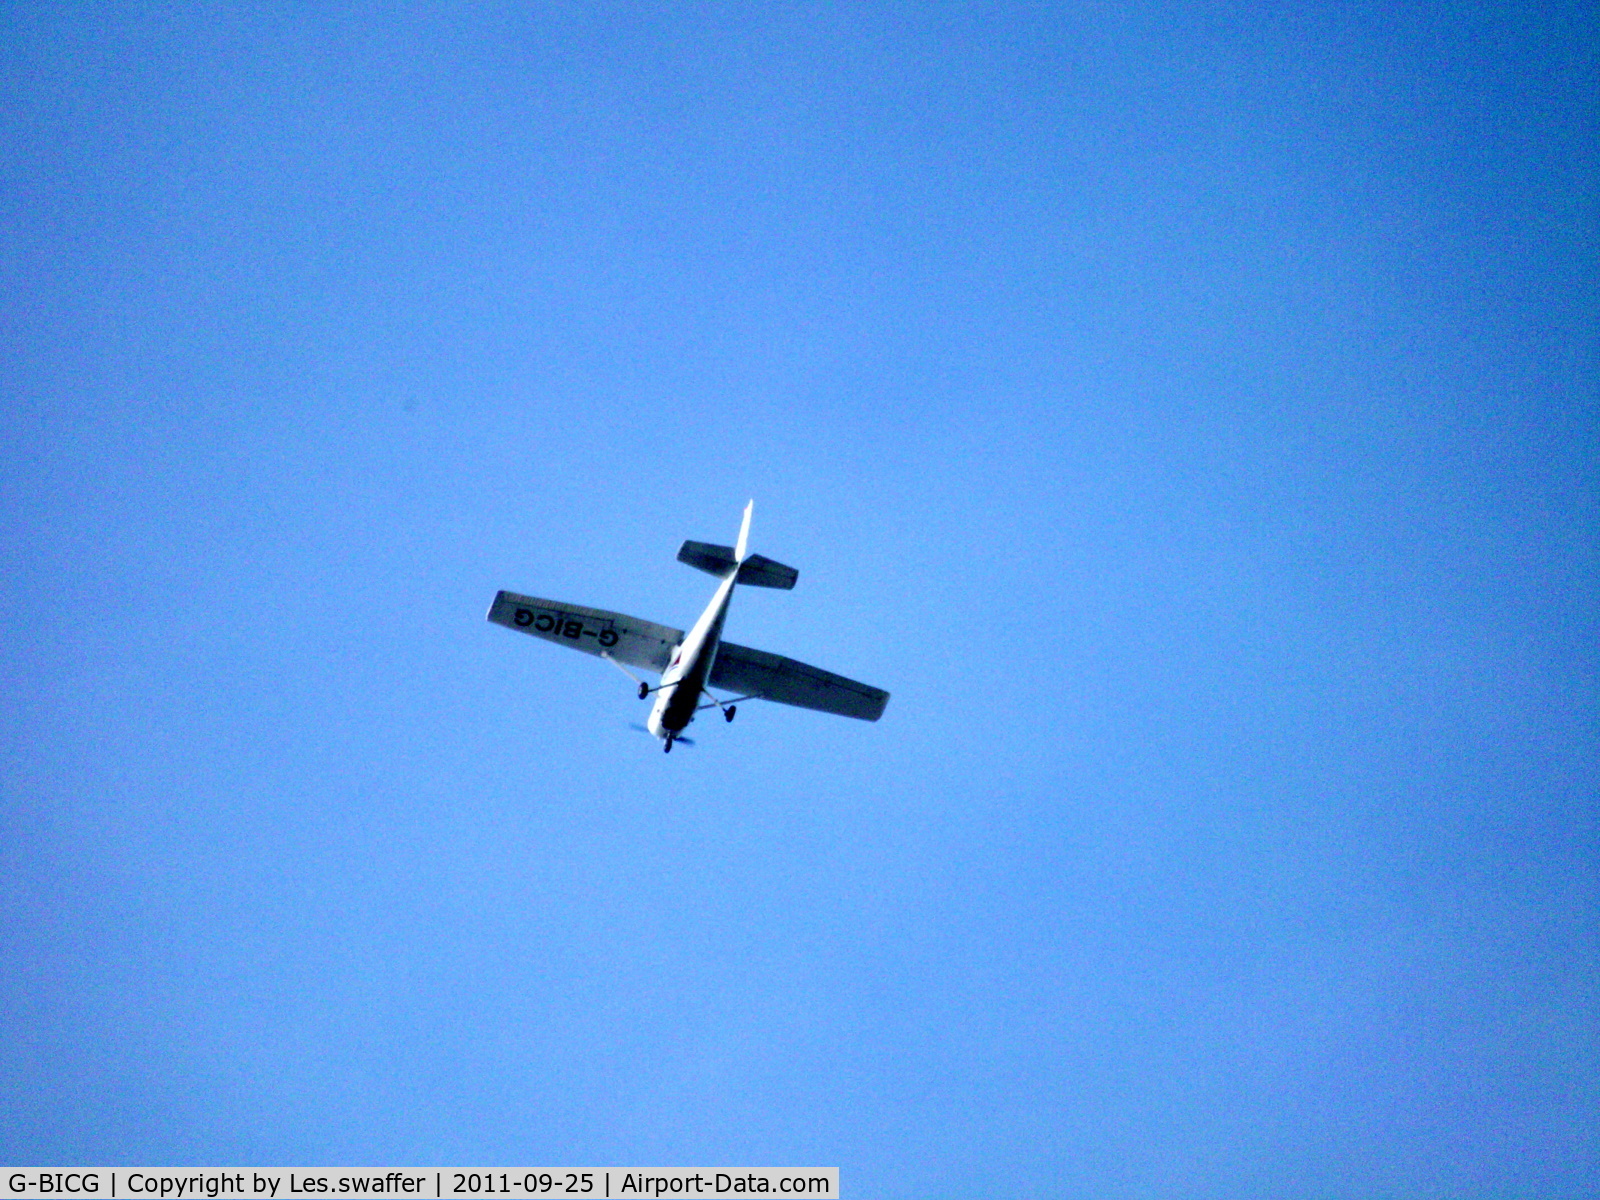 G-BICG, 1980 Reims F152 C/N 1796, Taken over Coxheath /Loose Maidstone border
25 september 2011